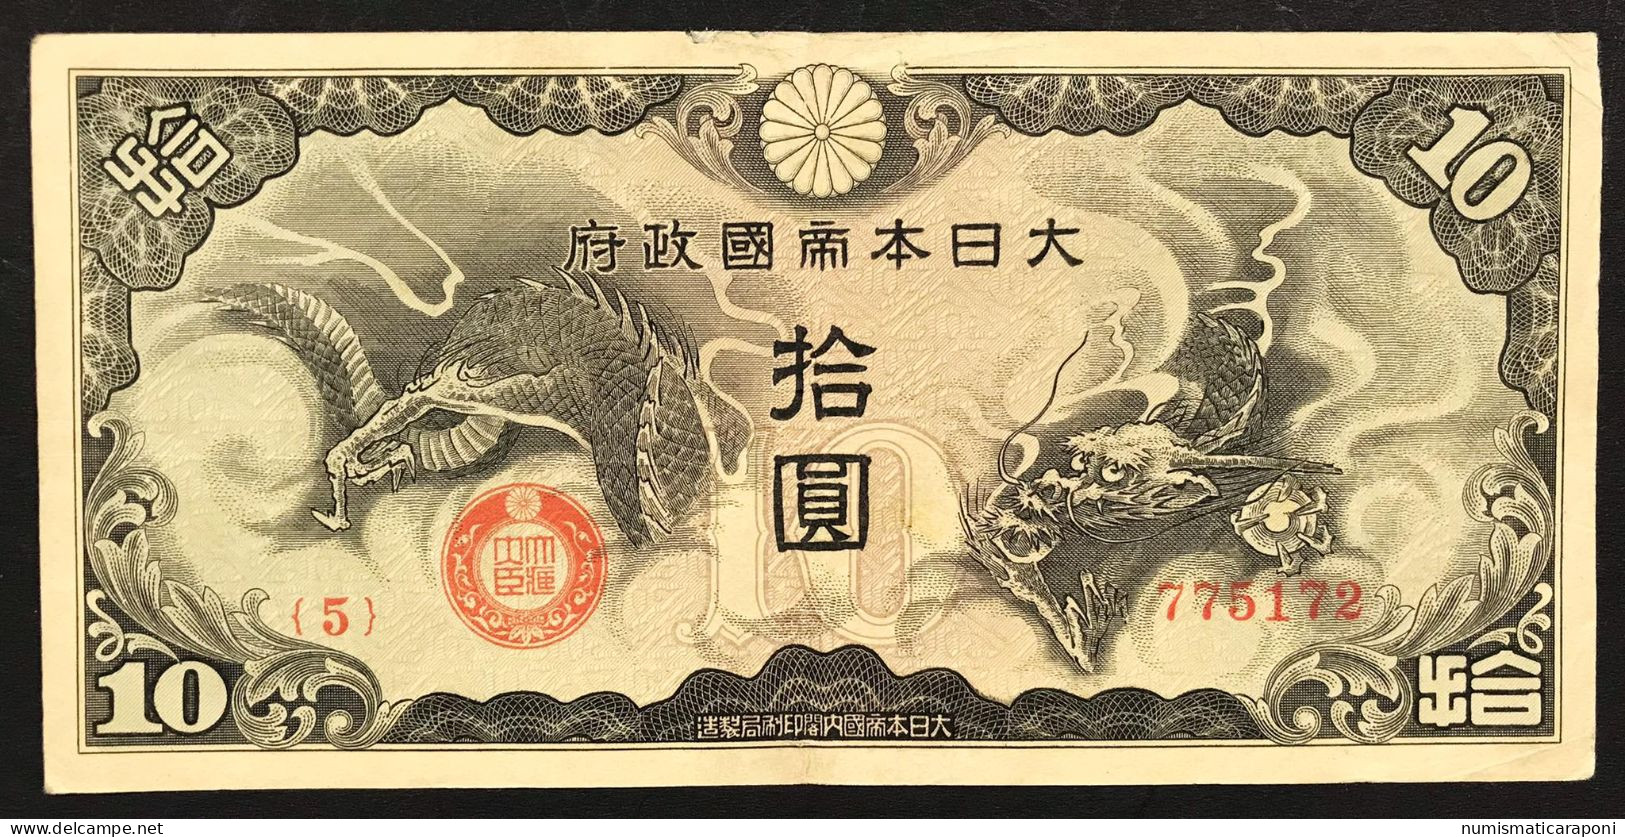 JAPAN Giappone 10 Yen 1940 Occupazione In Cina Pick#m19a LOTTO 655 - Japan